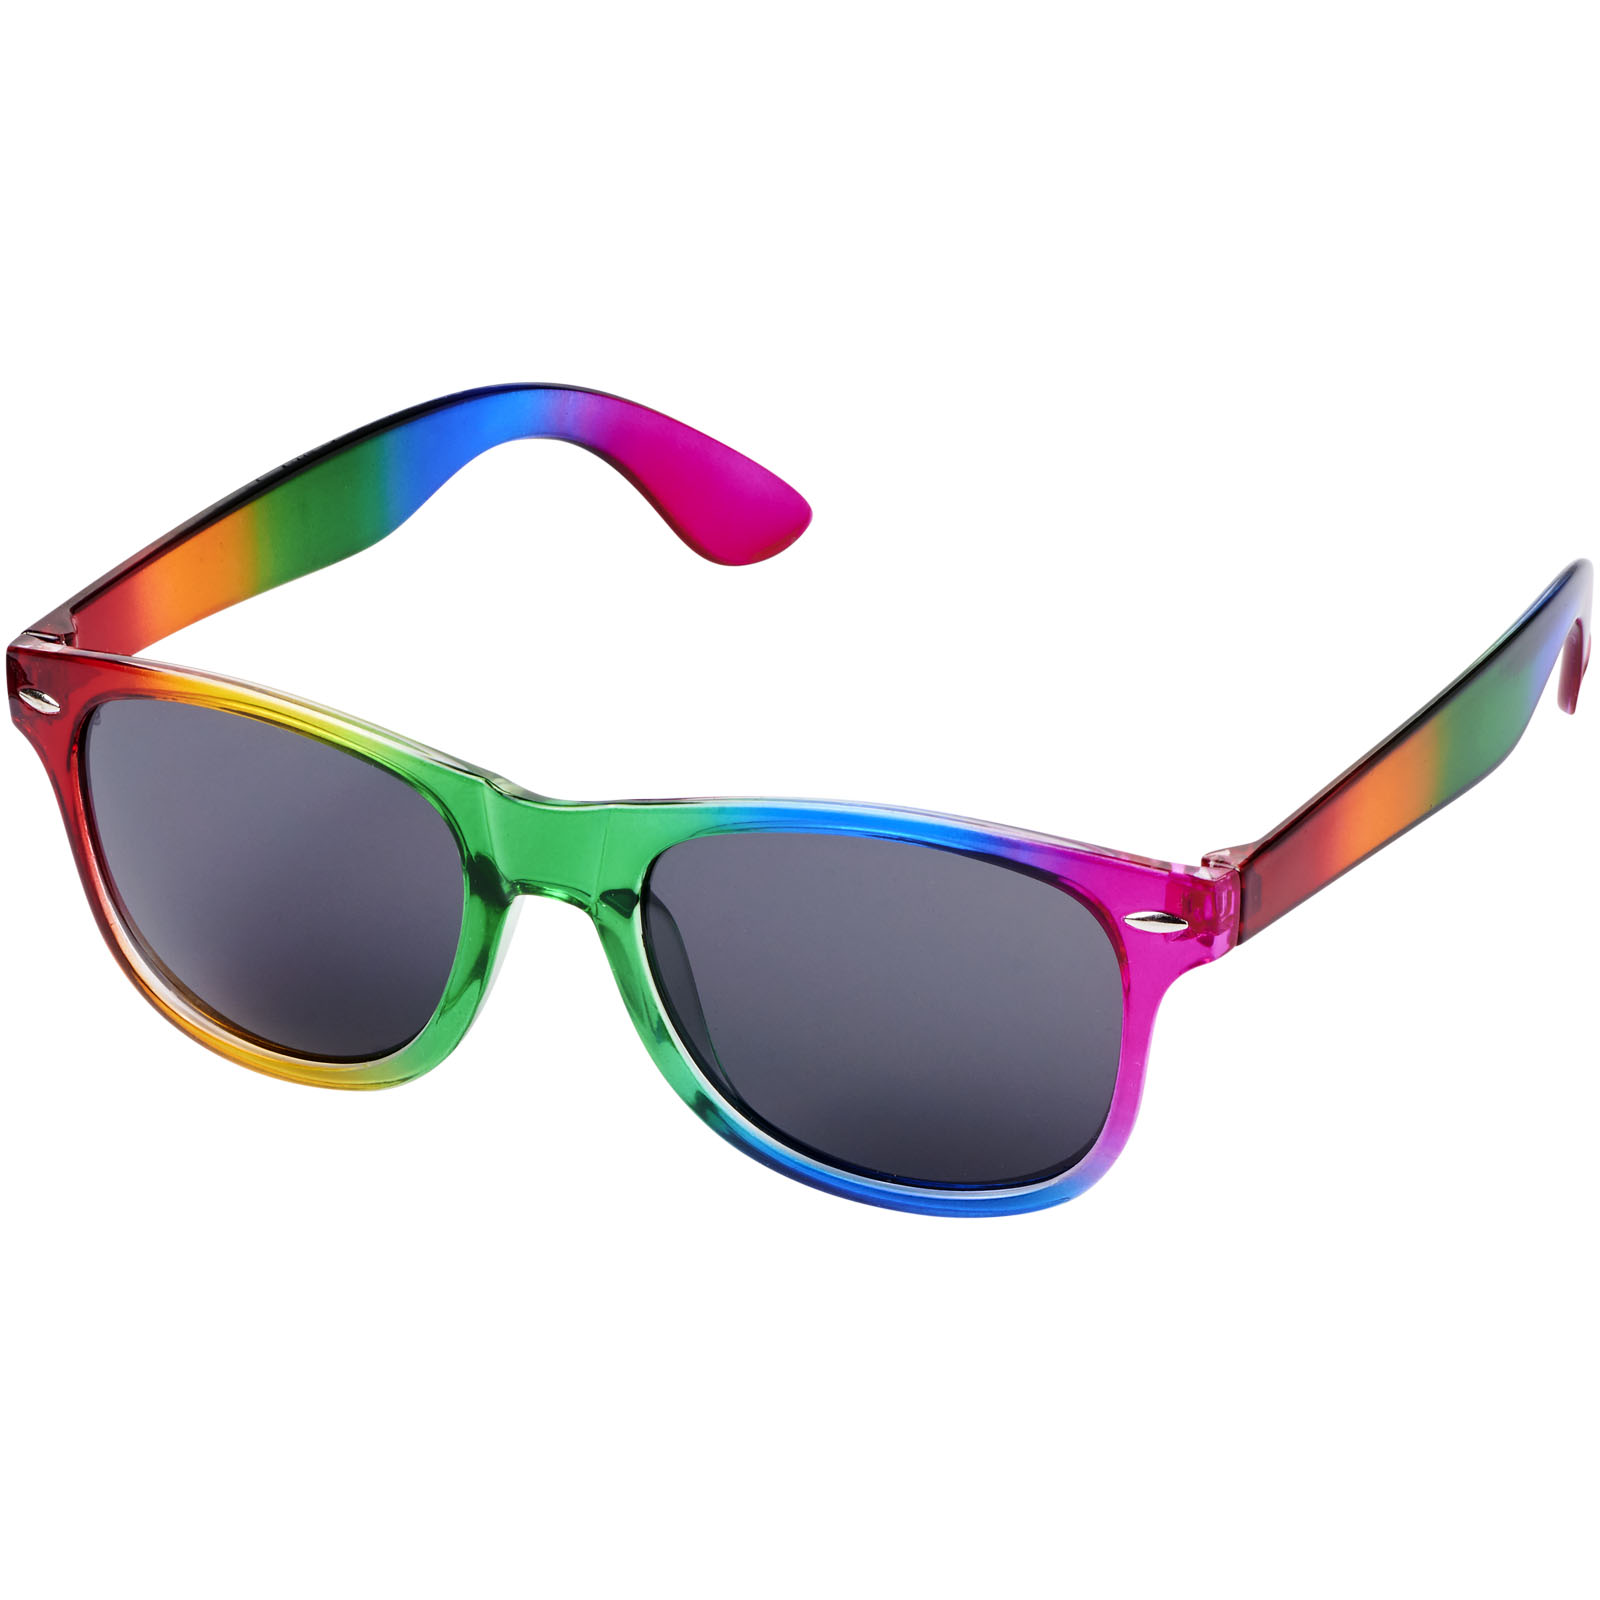 Advertising Sunglasses - Sun Ray rainbow sunglasses